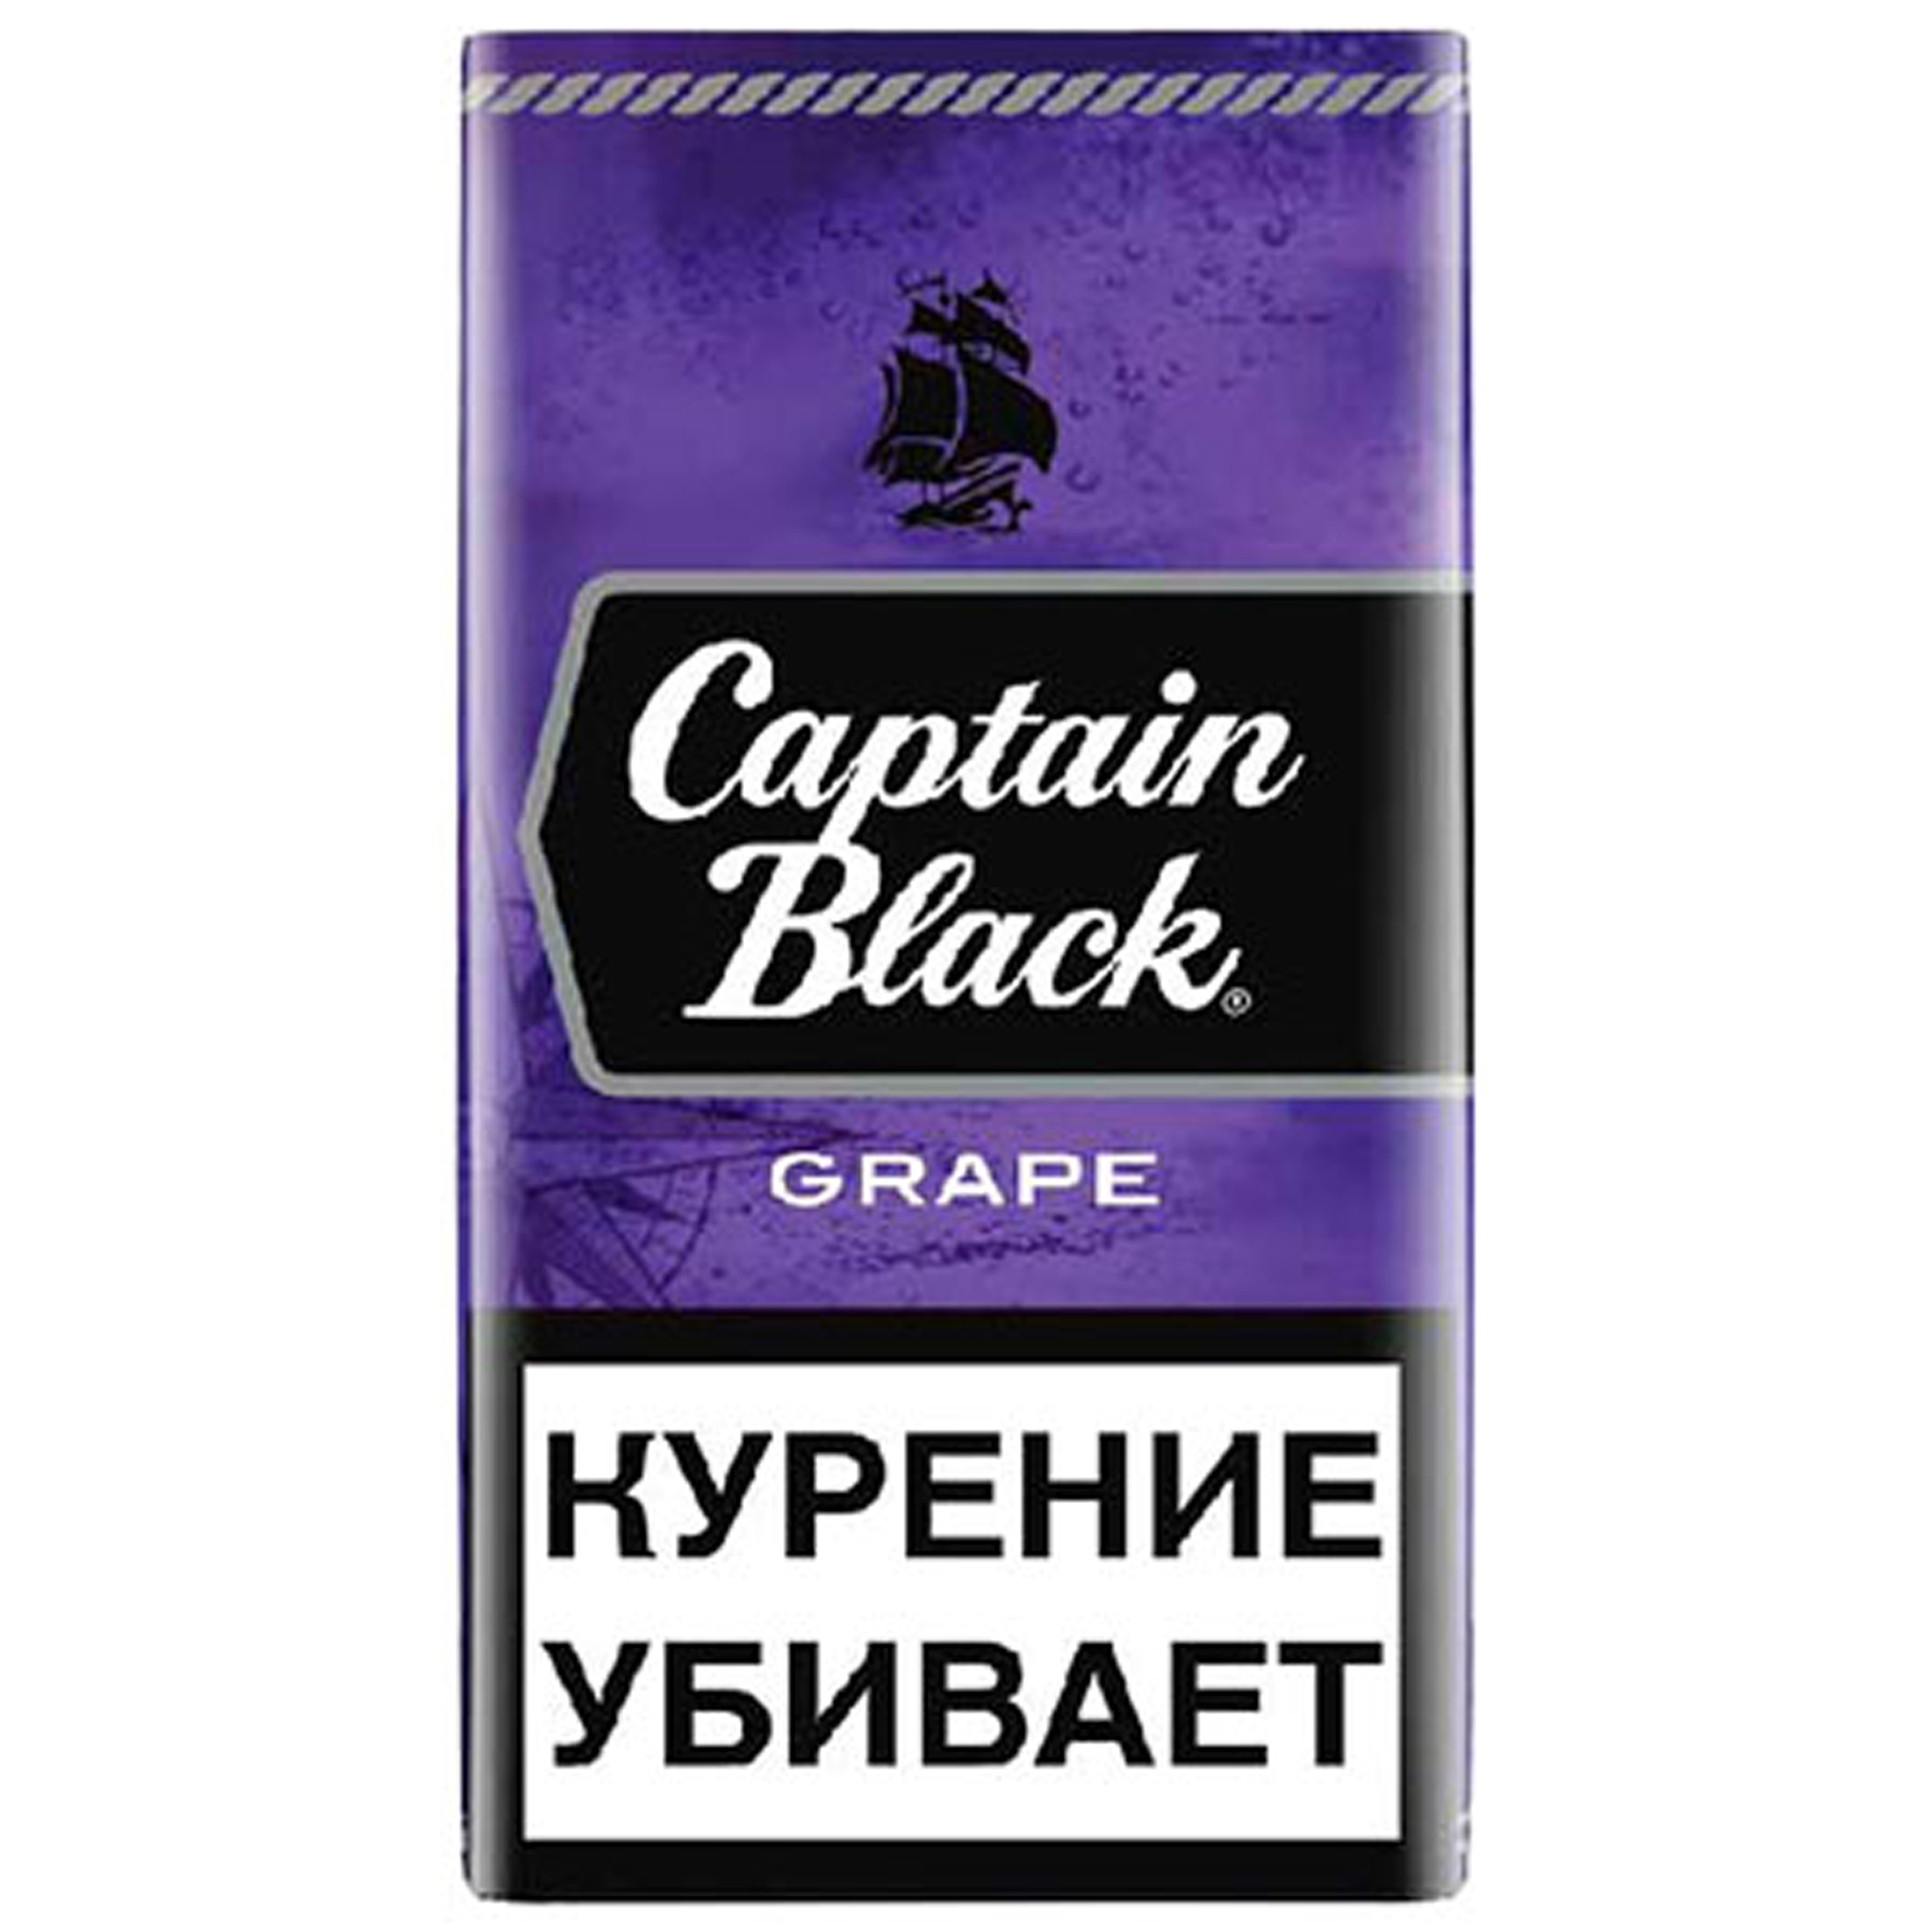 Сигариллы Captain Black grape 20